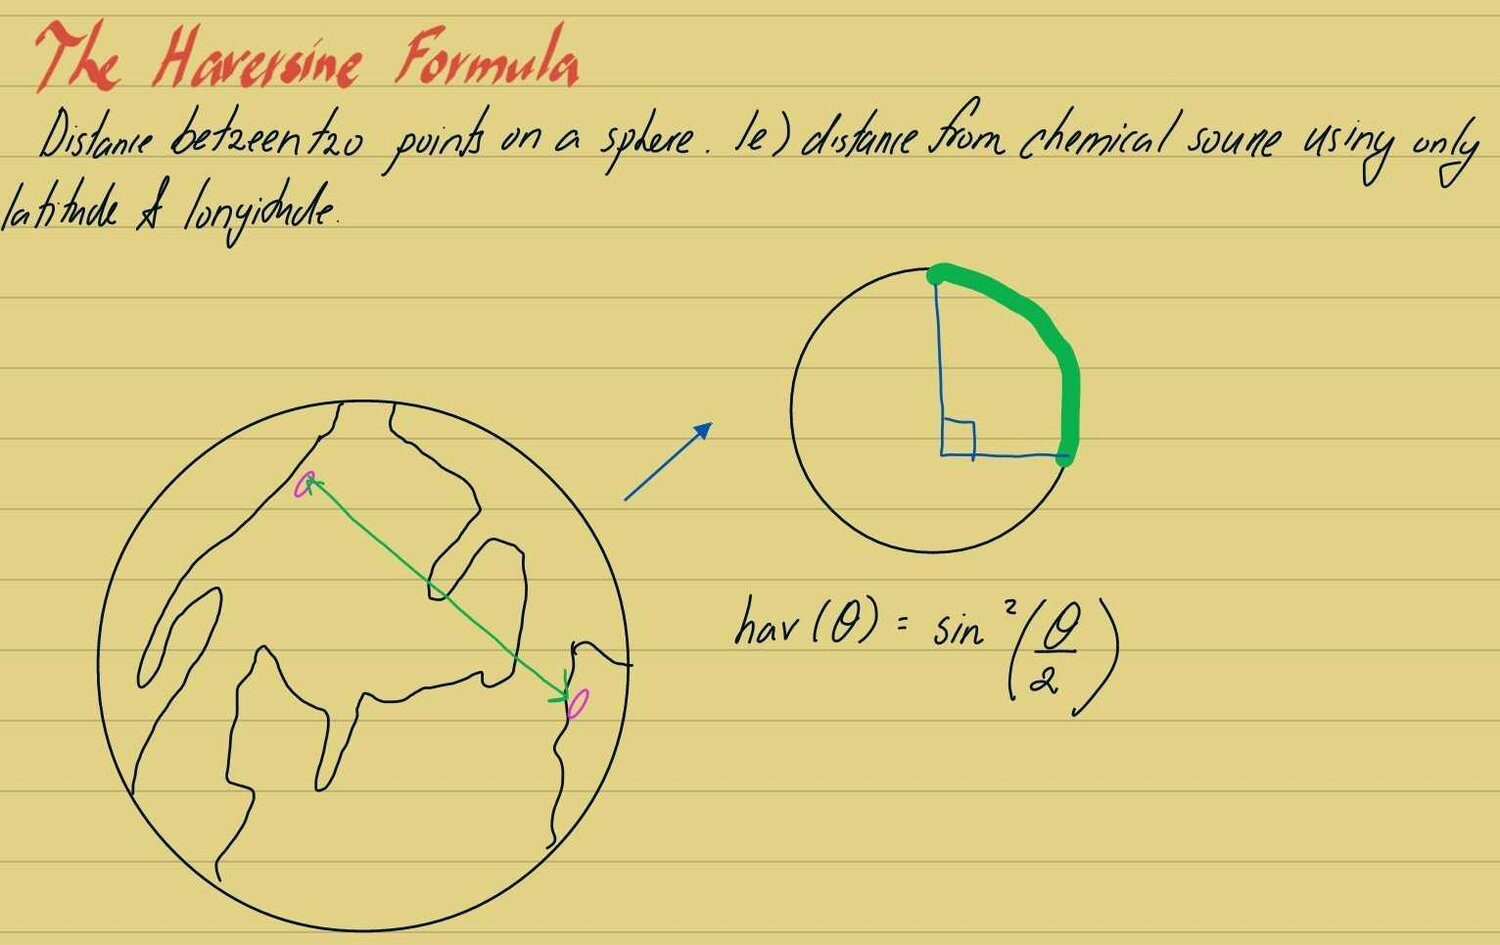 Figure  - Geodesic distance of a sphere (the globe) using harversine